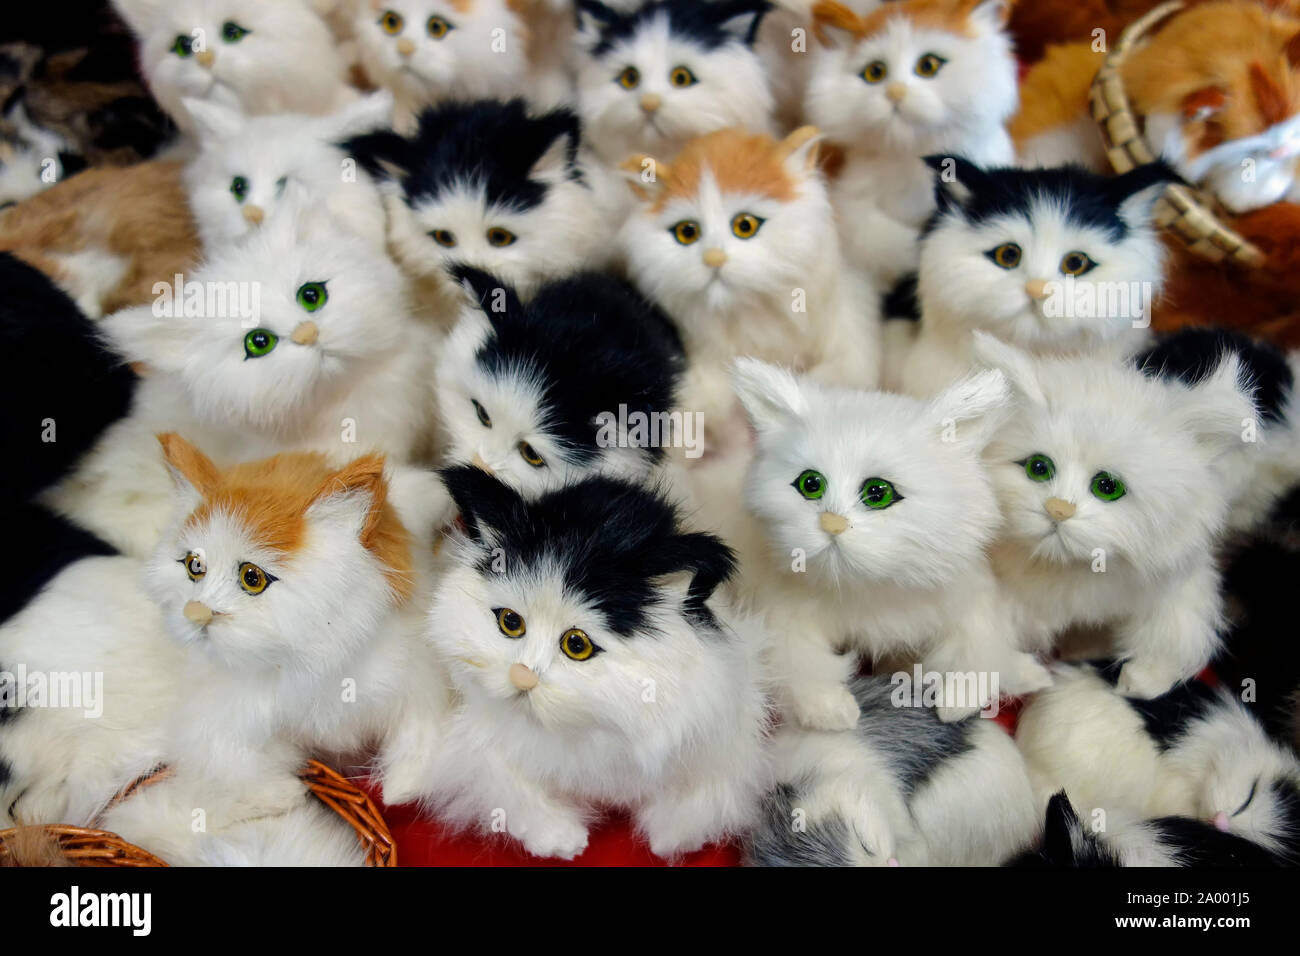 toy kittens